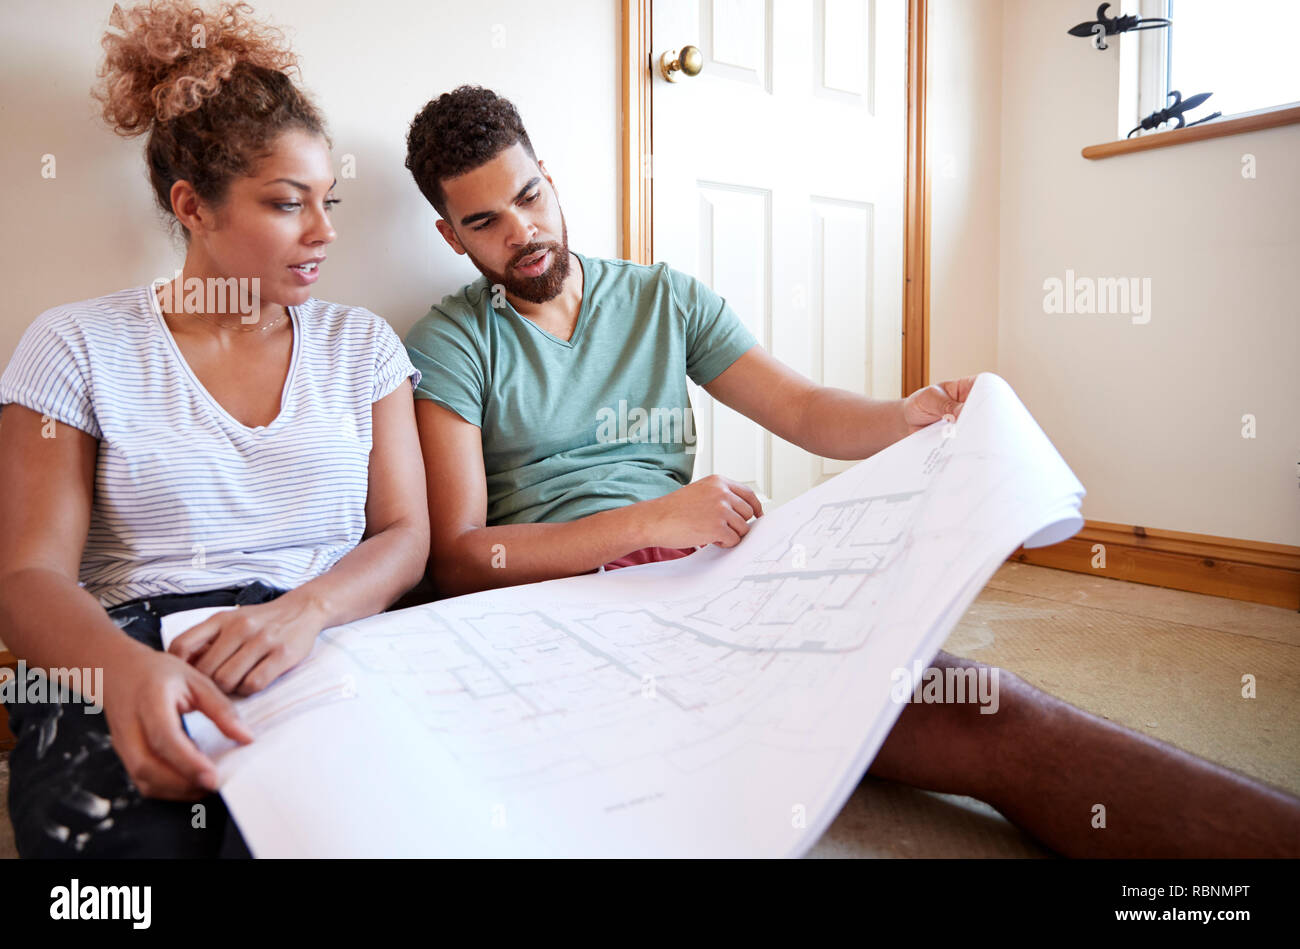 Couple Sitting on Floor Looking At Plans en salle vide de New Home Banque D'Images